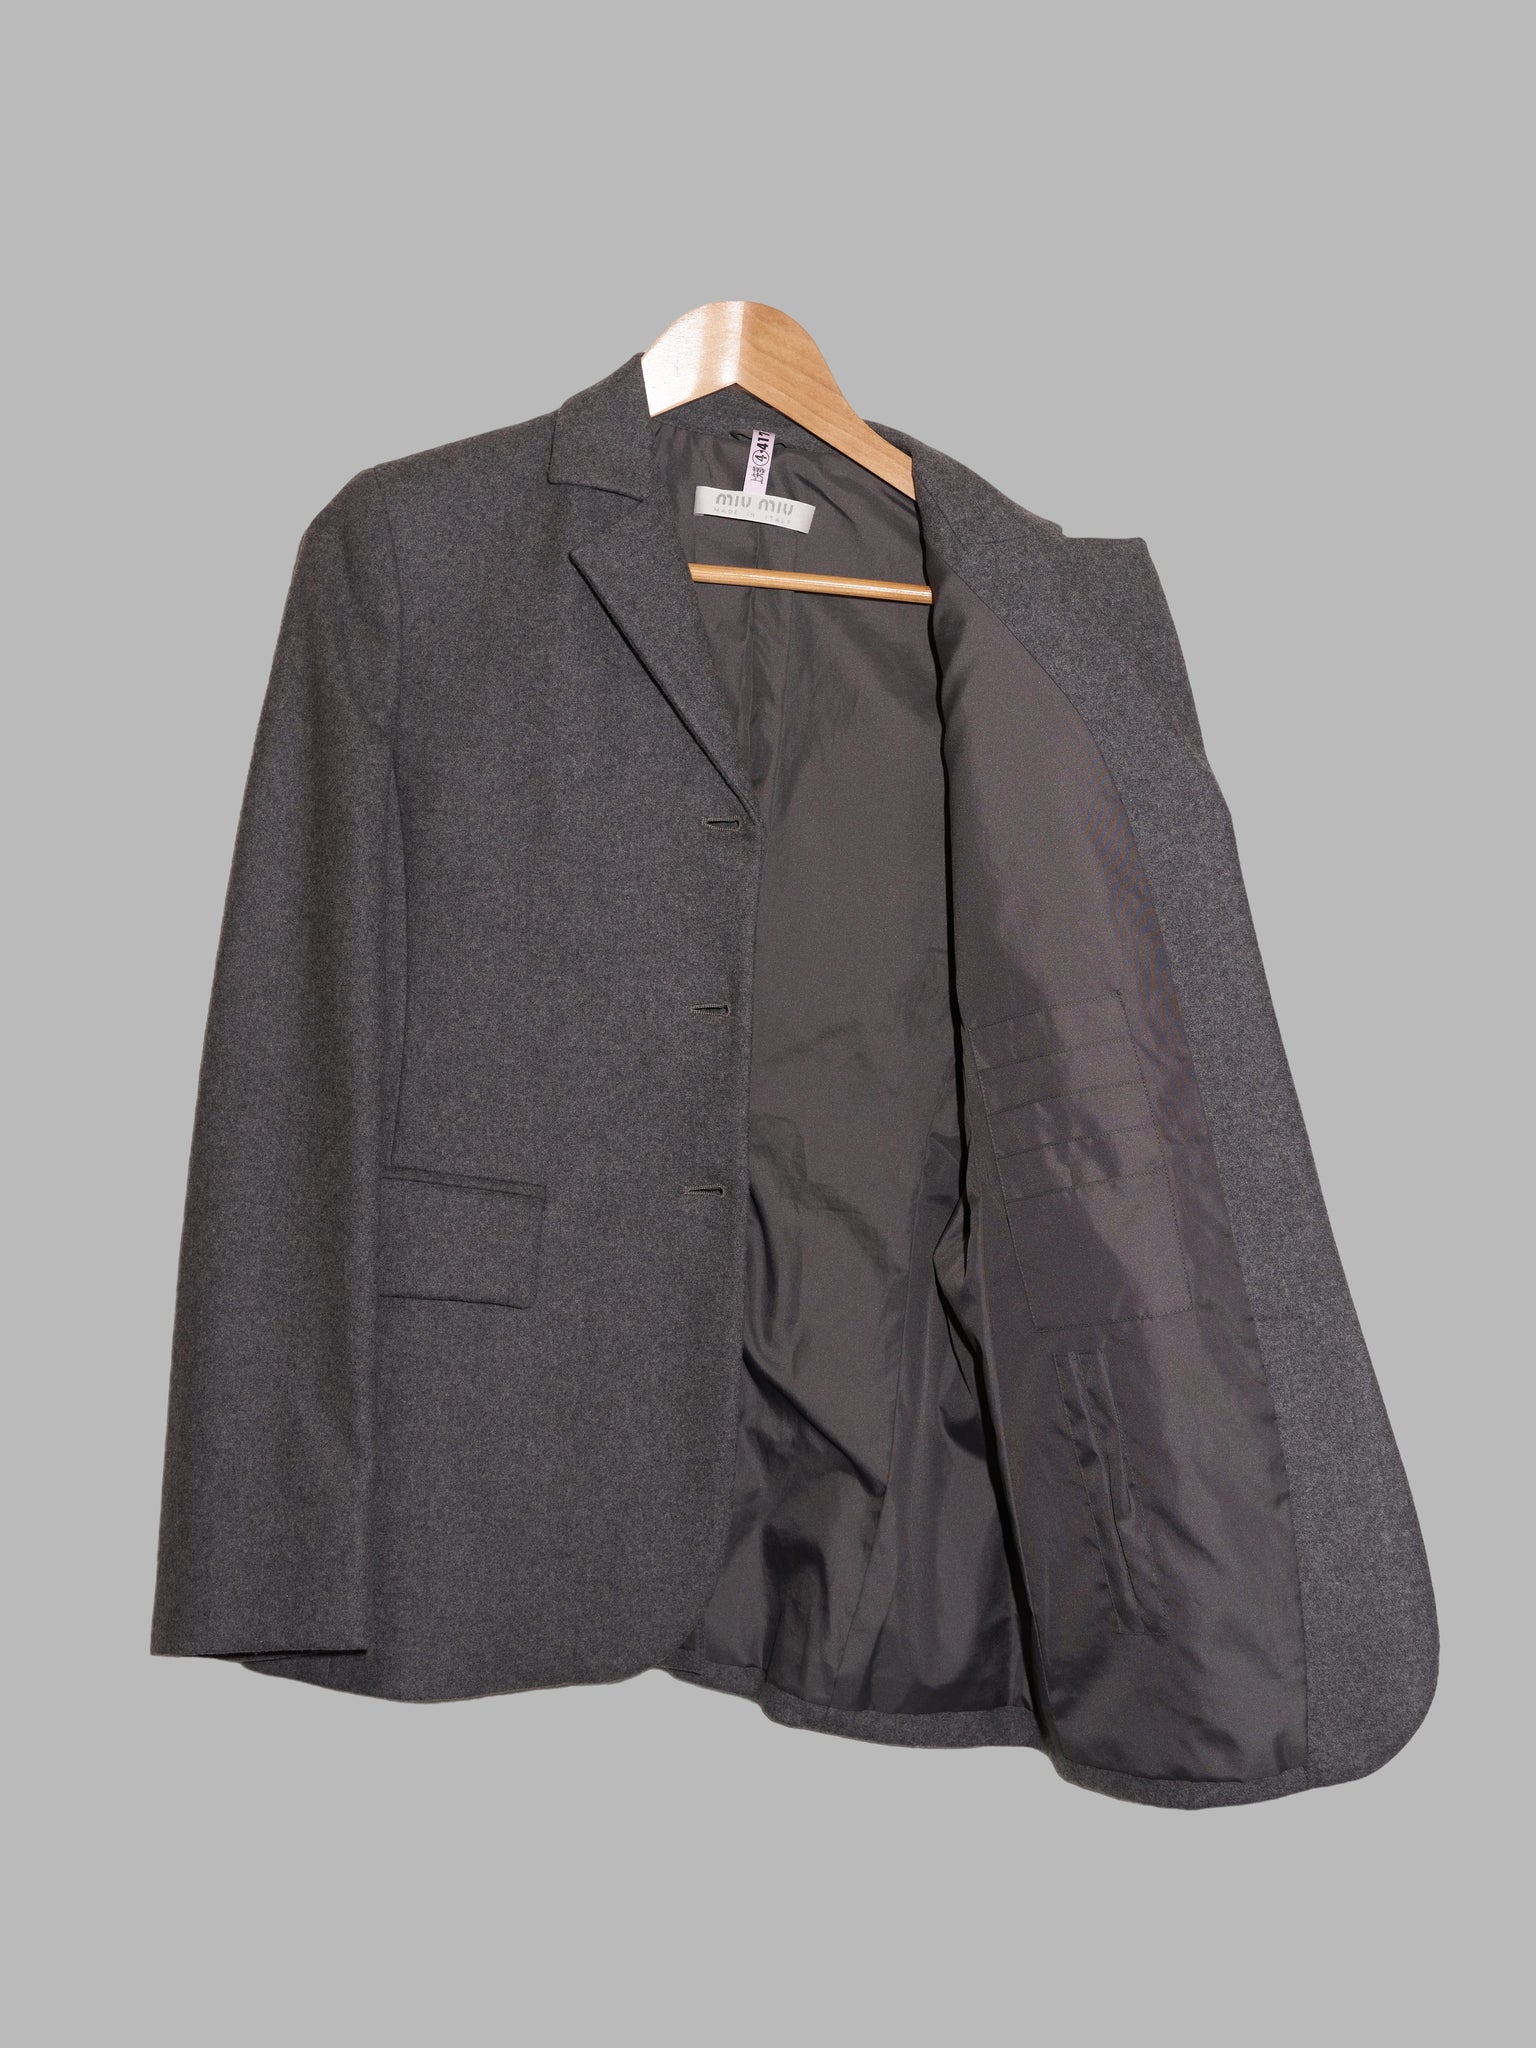 Miu Miu 1990s dark grey melton wool interior card pocket three button blazer 44